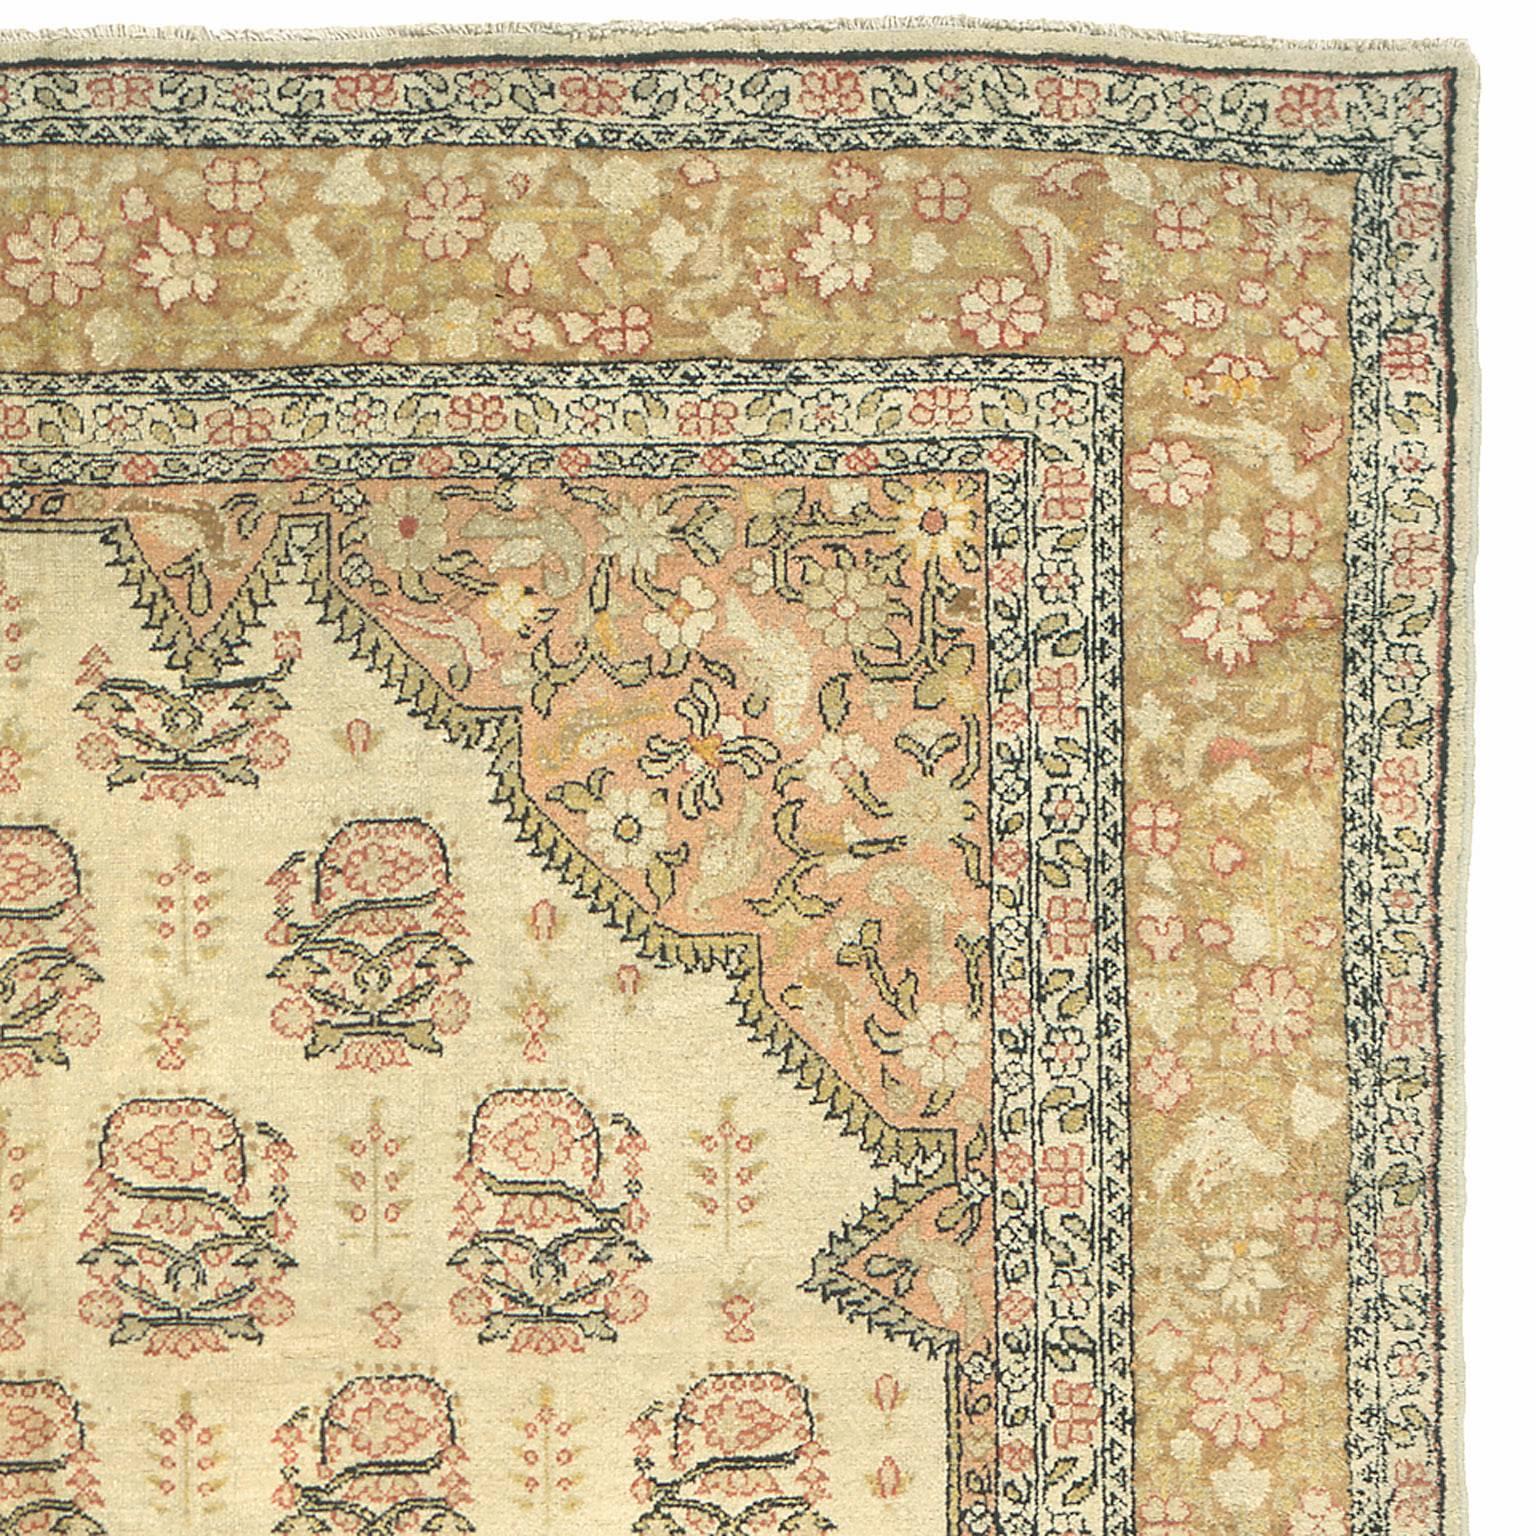 Late 19th century Agra carpet.